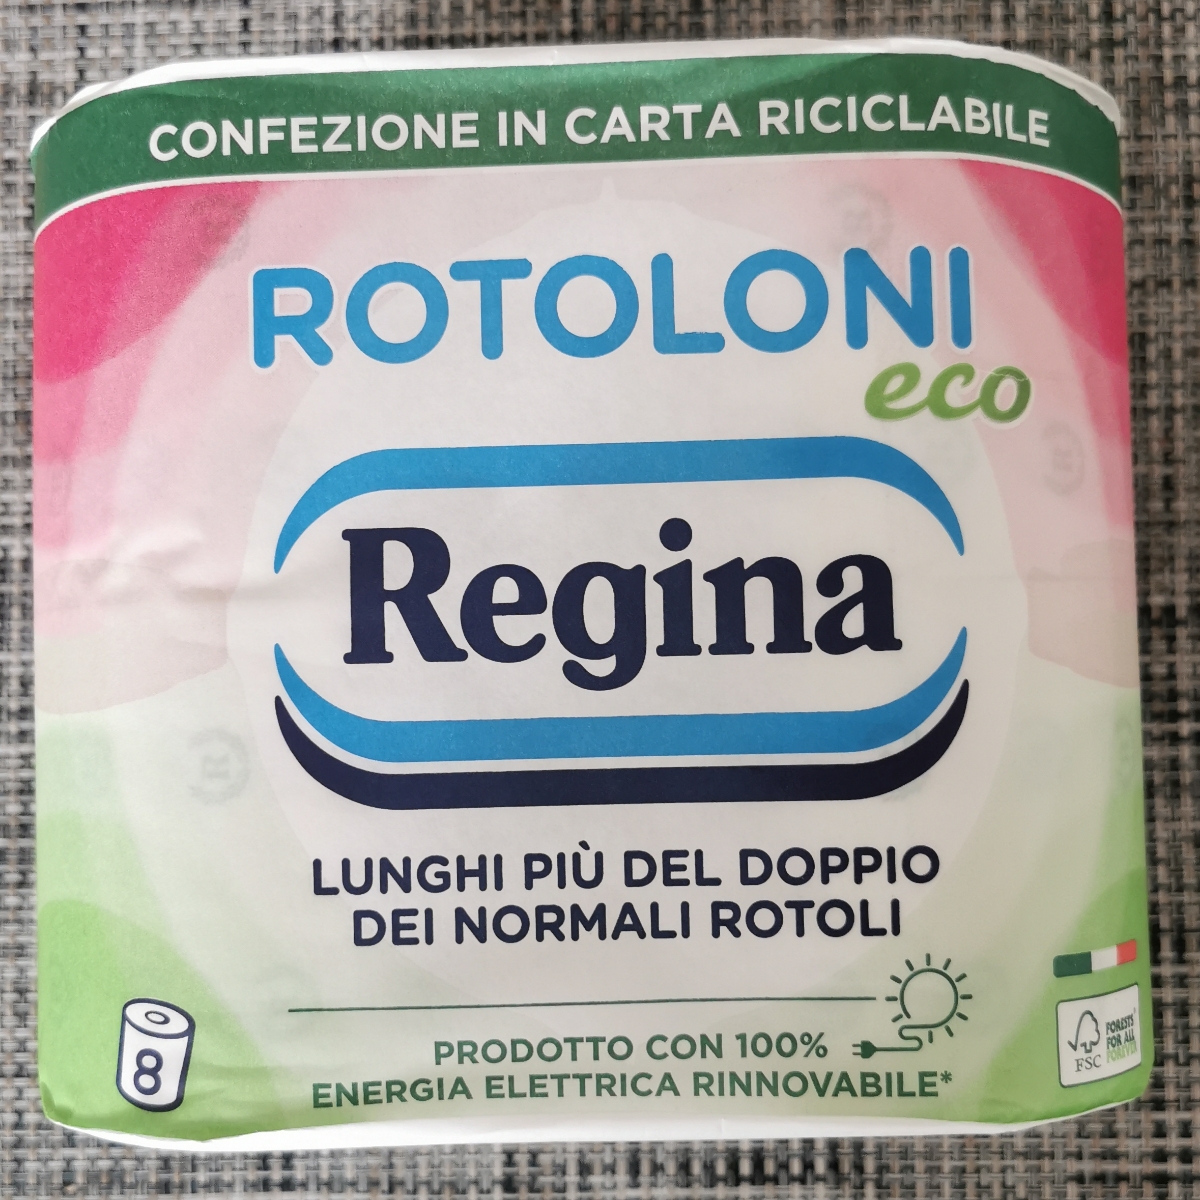 Regina Rotoloni regina Eco Review | abillion